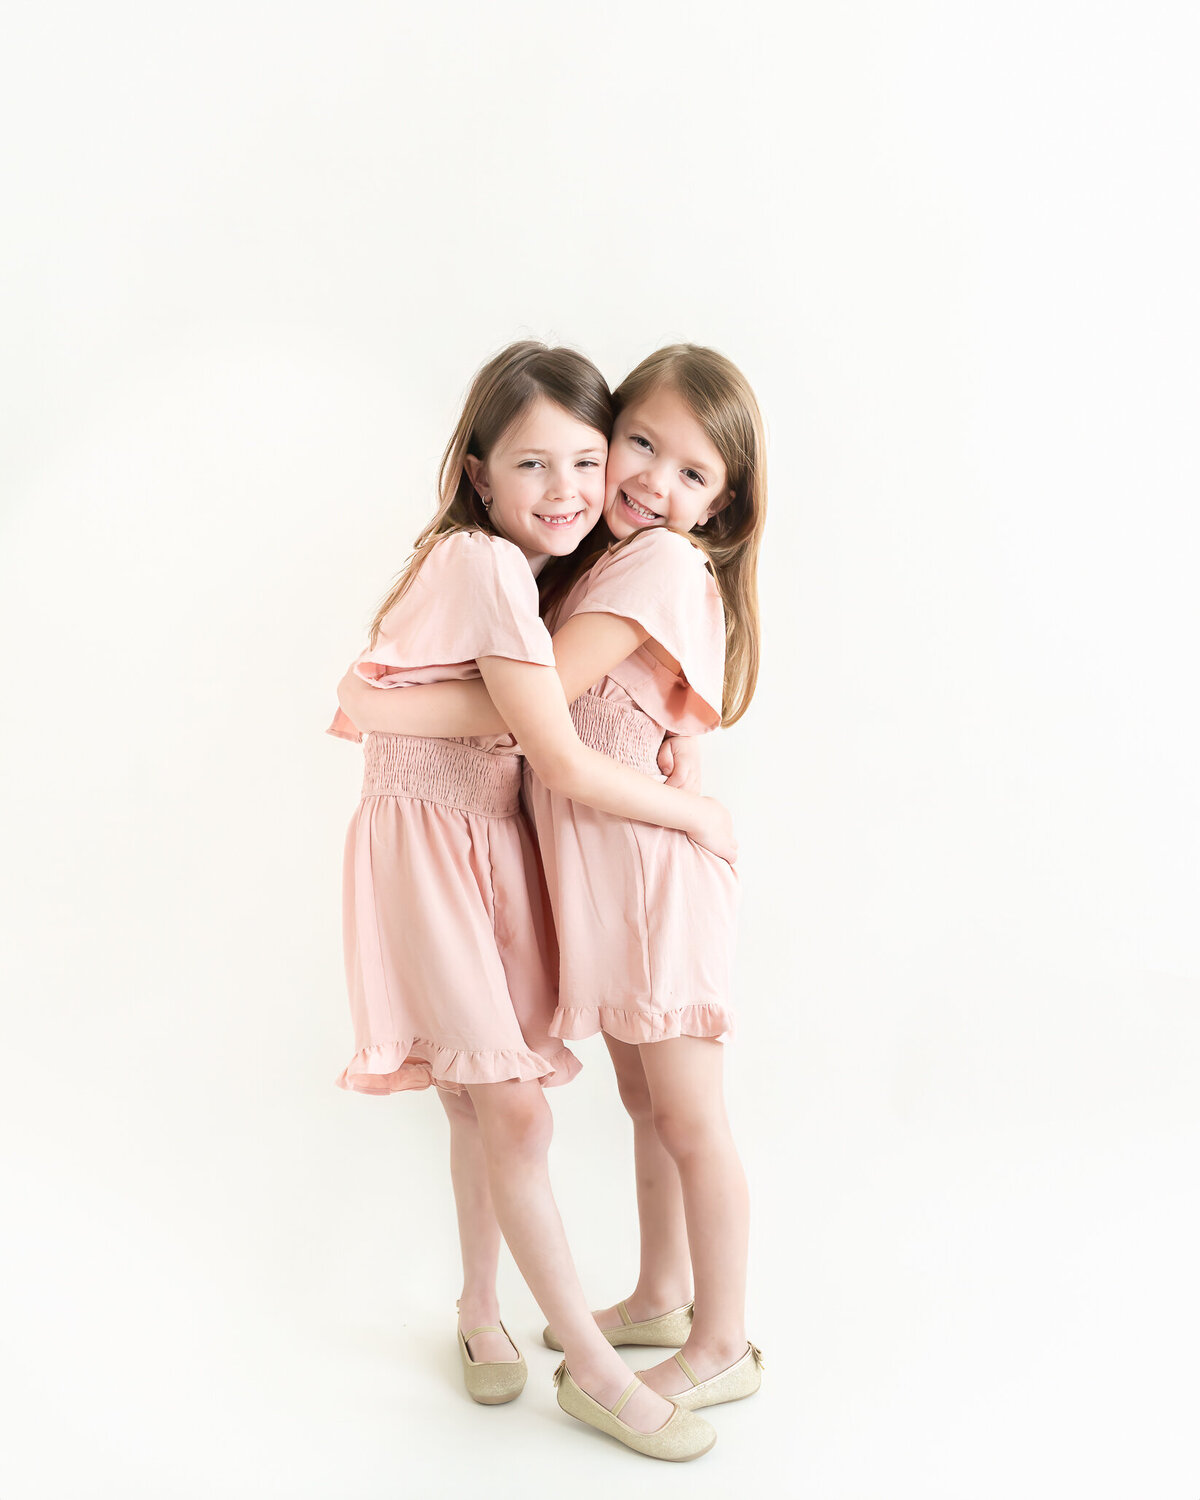 studio portrait of little girls in matching pink dresses hugging